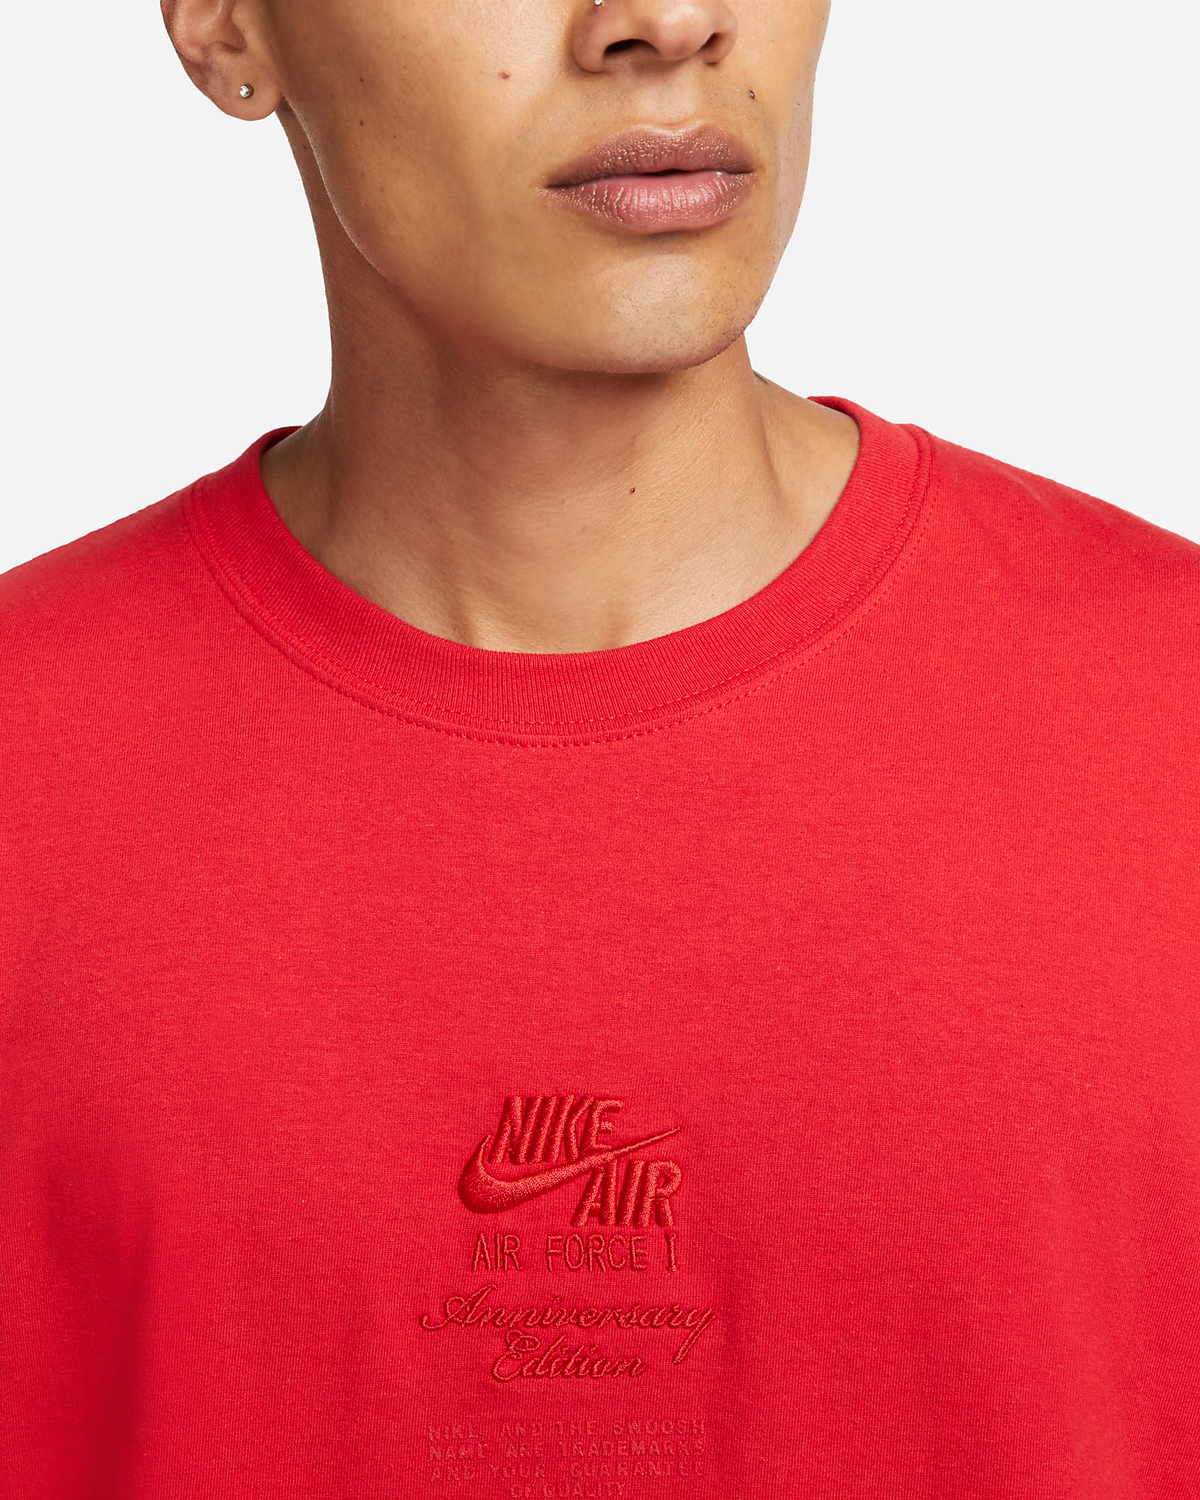 Nike-Air-Force-1-University-Red-Shirt-2